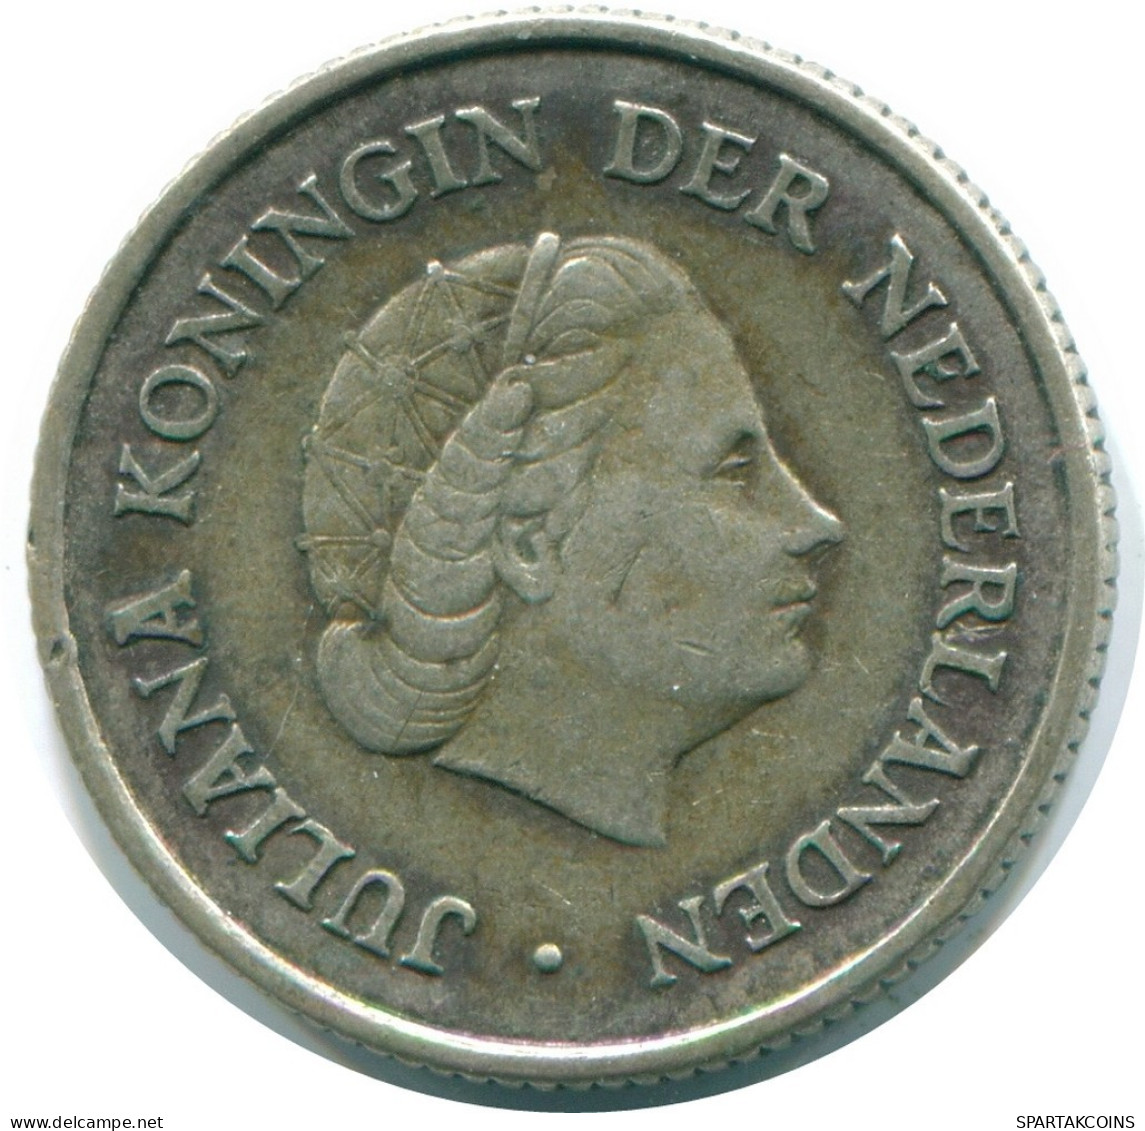 1/4 GULDEN 1962 NETHERLANDS ANTILLES SILVER Colonial Coin #NL11138.4.U.A - Niederländische Antillen